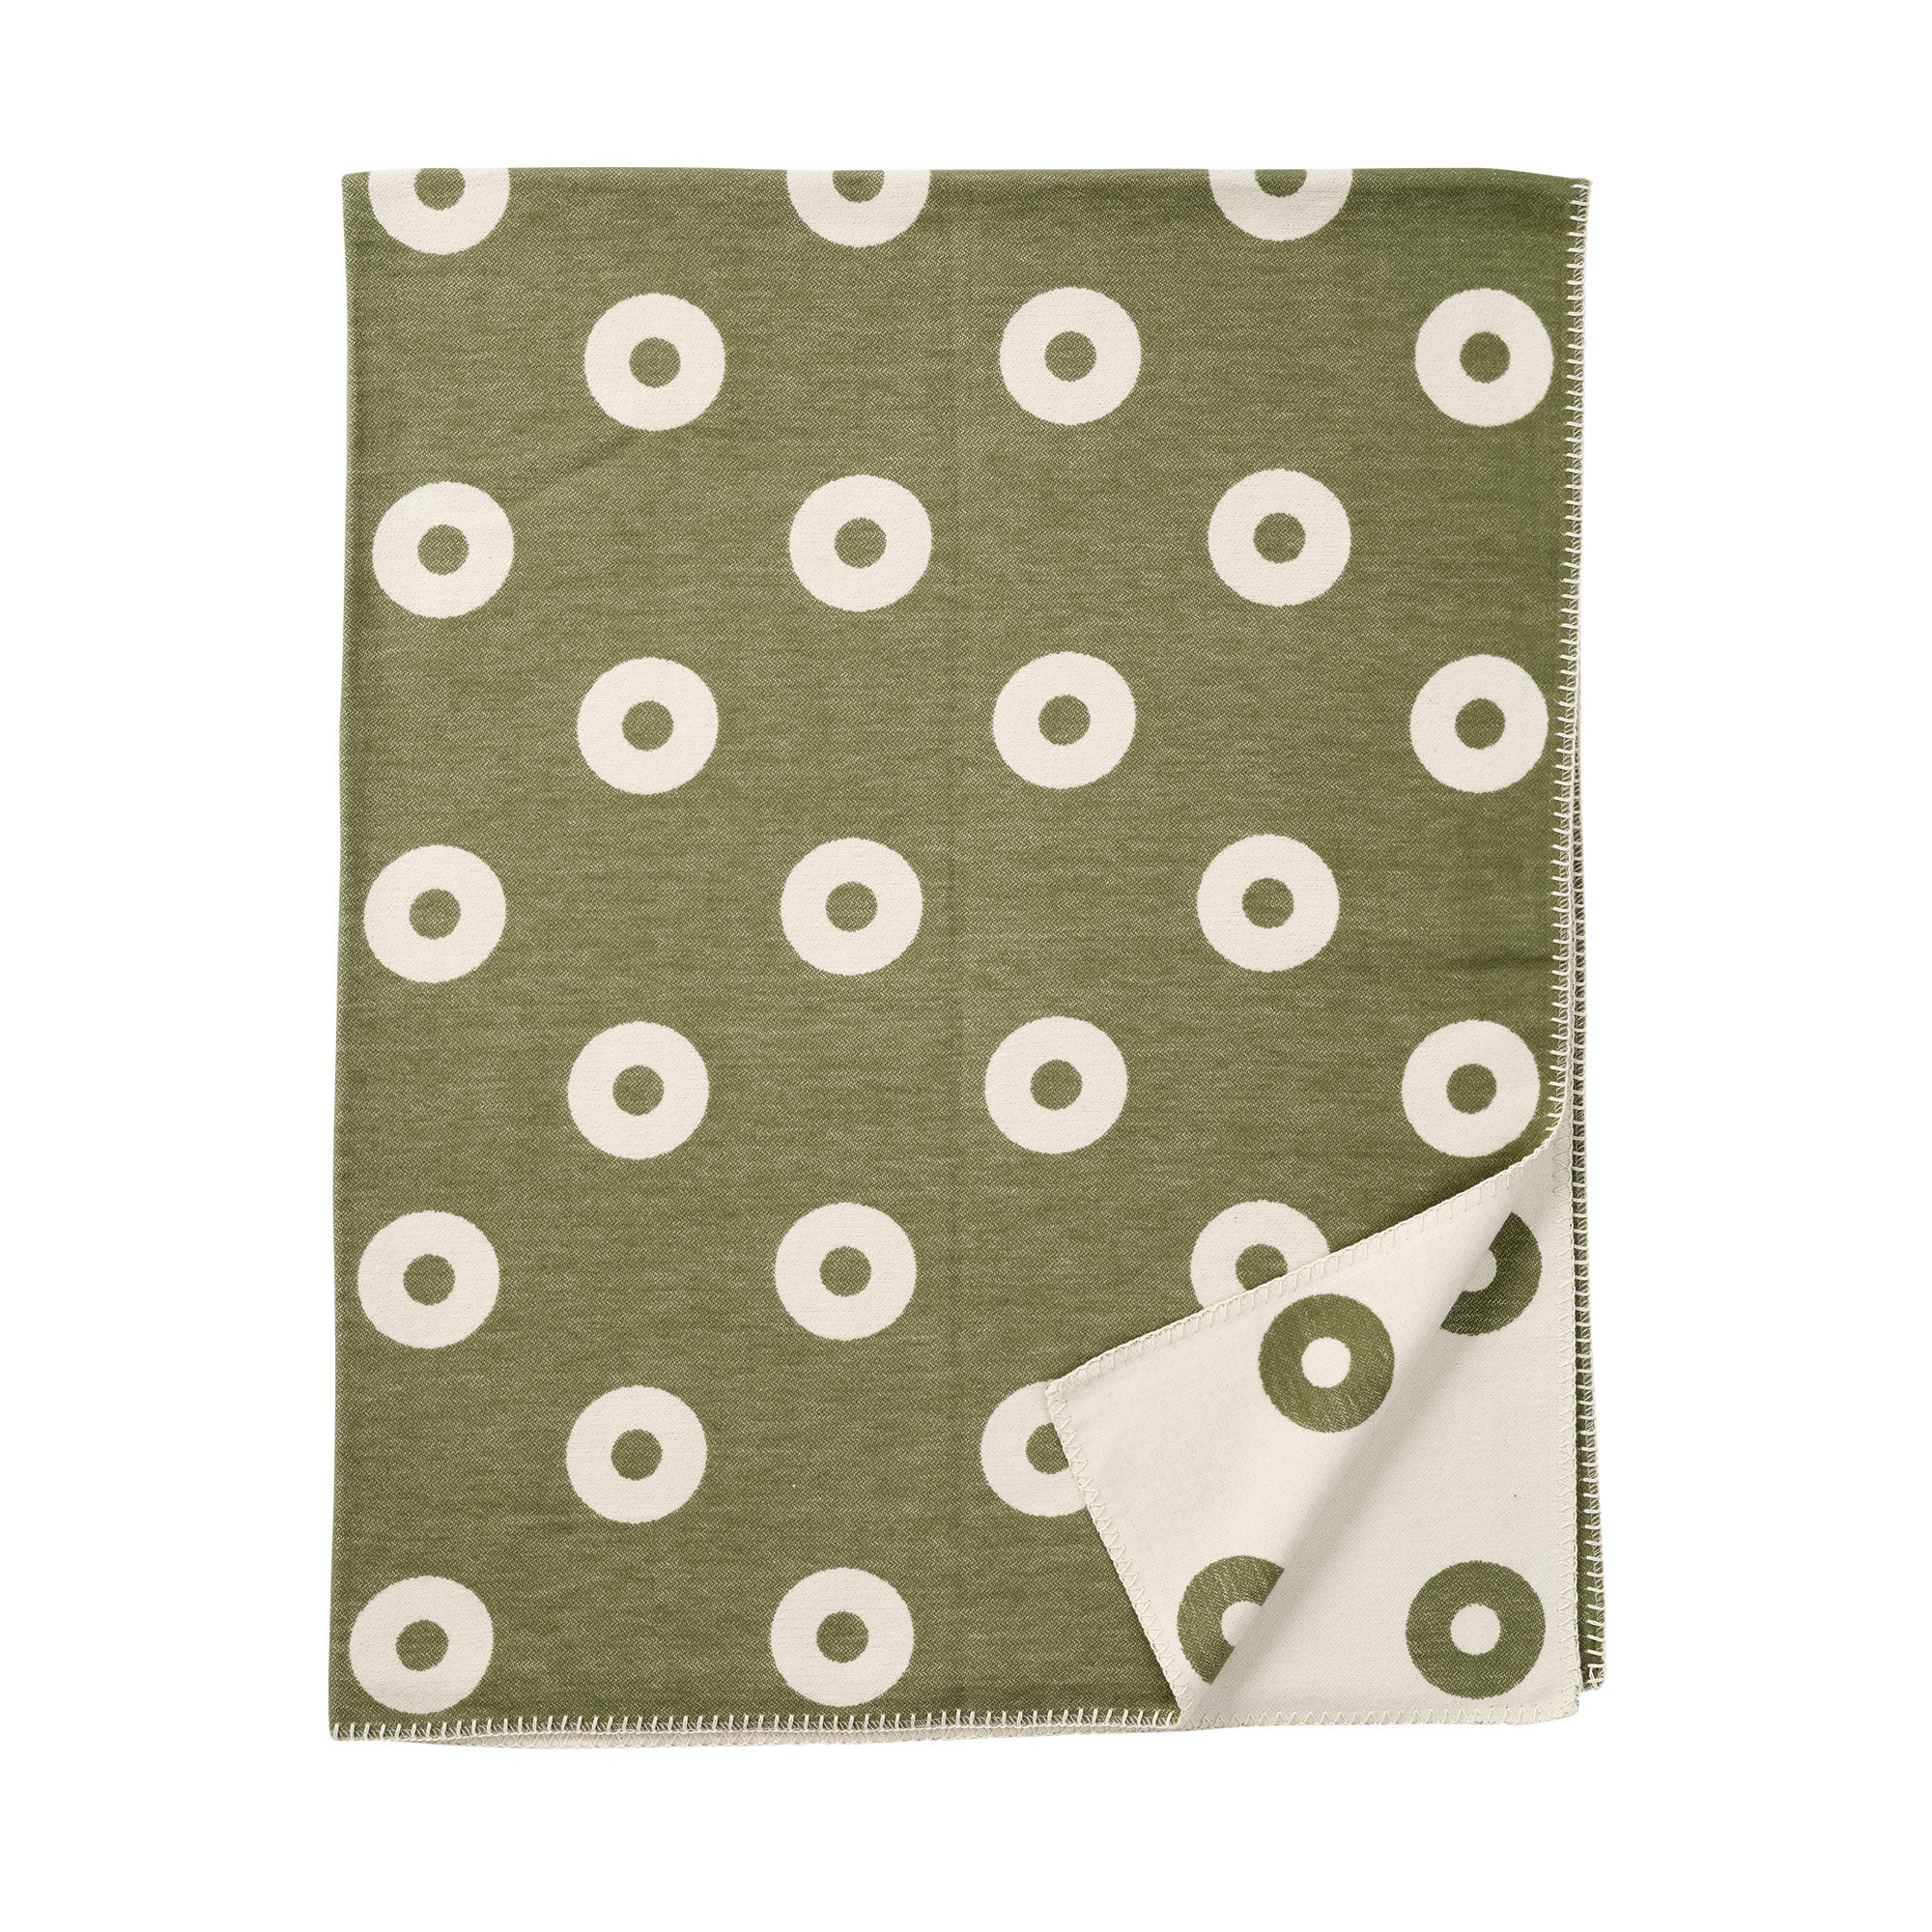 Rings Green 140x180cm Brushed Organic Cotton Blanket